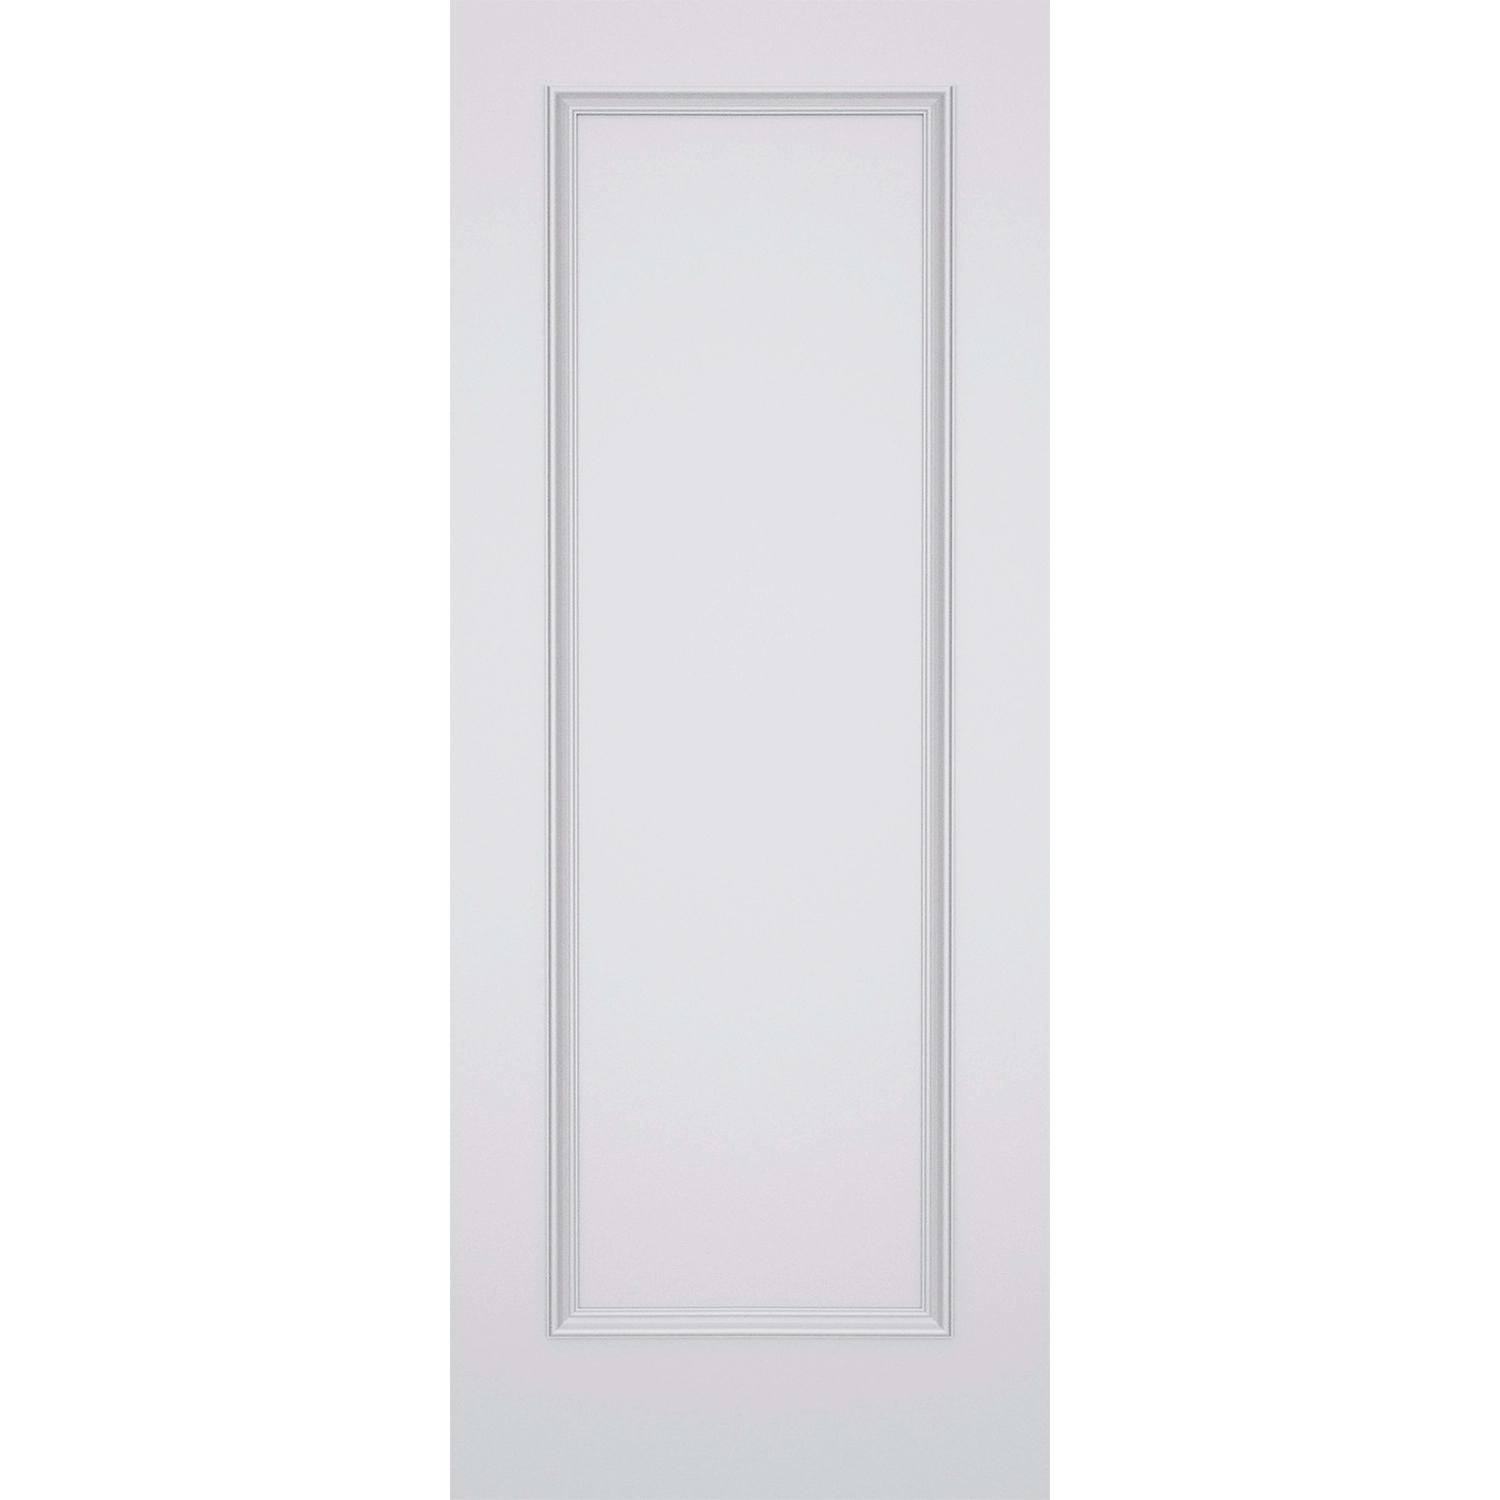 1 Panel 80 x 32 x 1-3/8 Smooth Hollow Door Raised